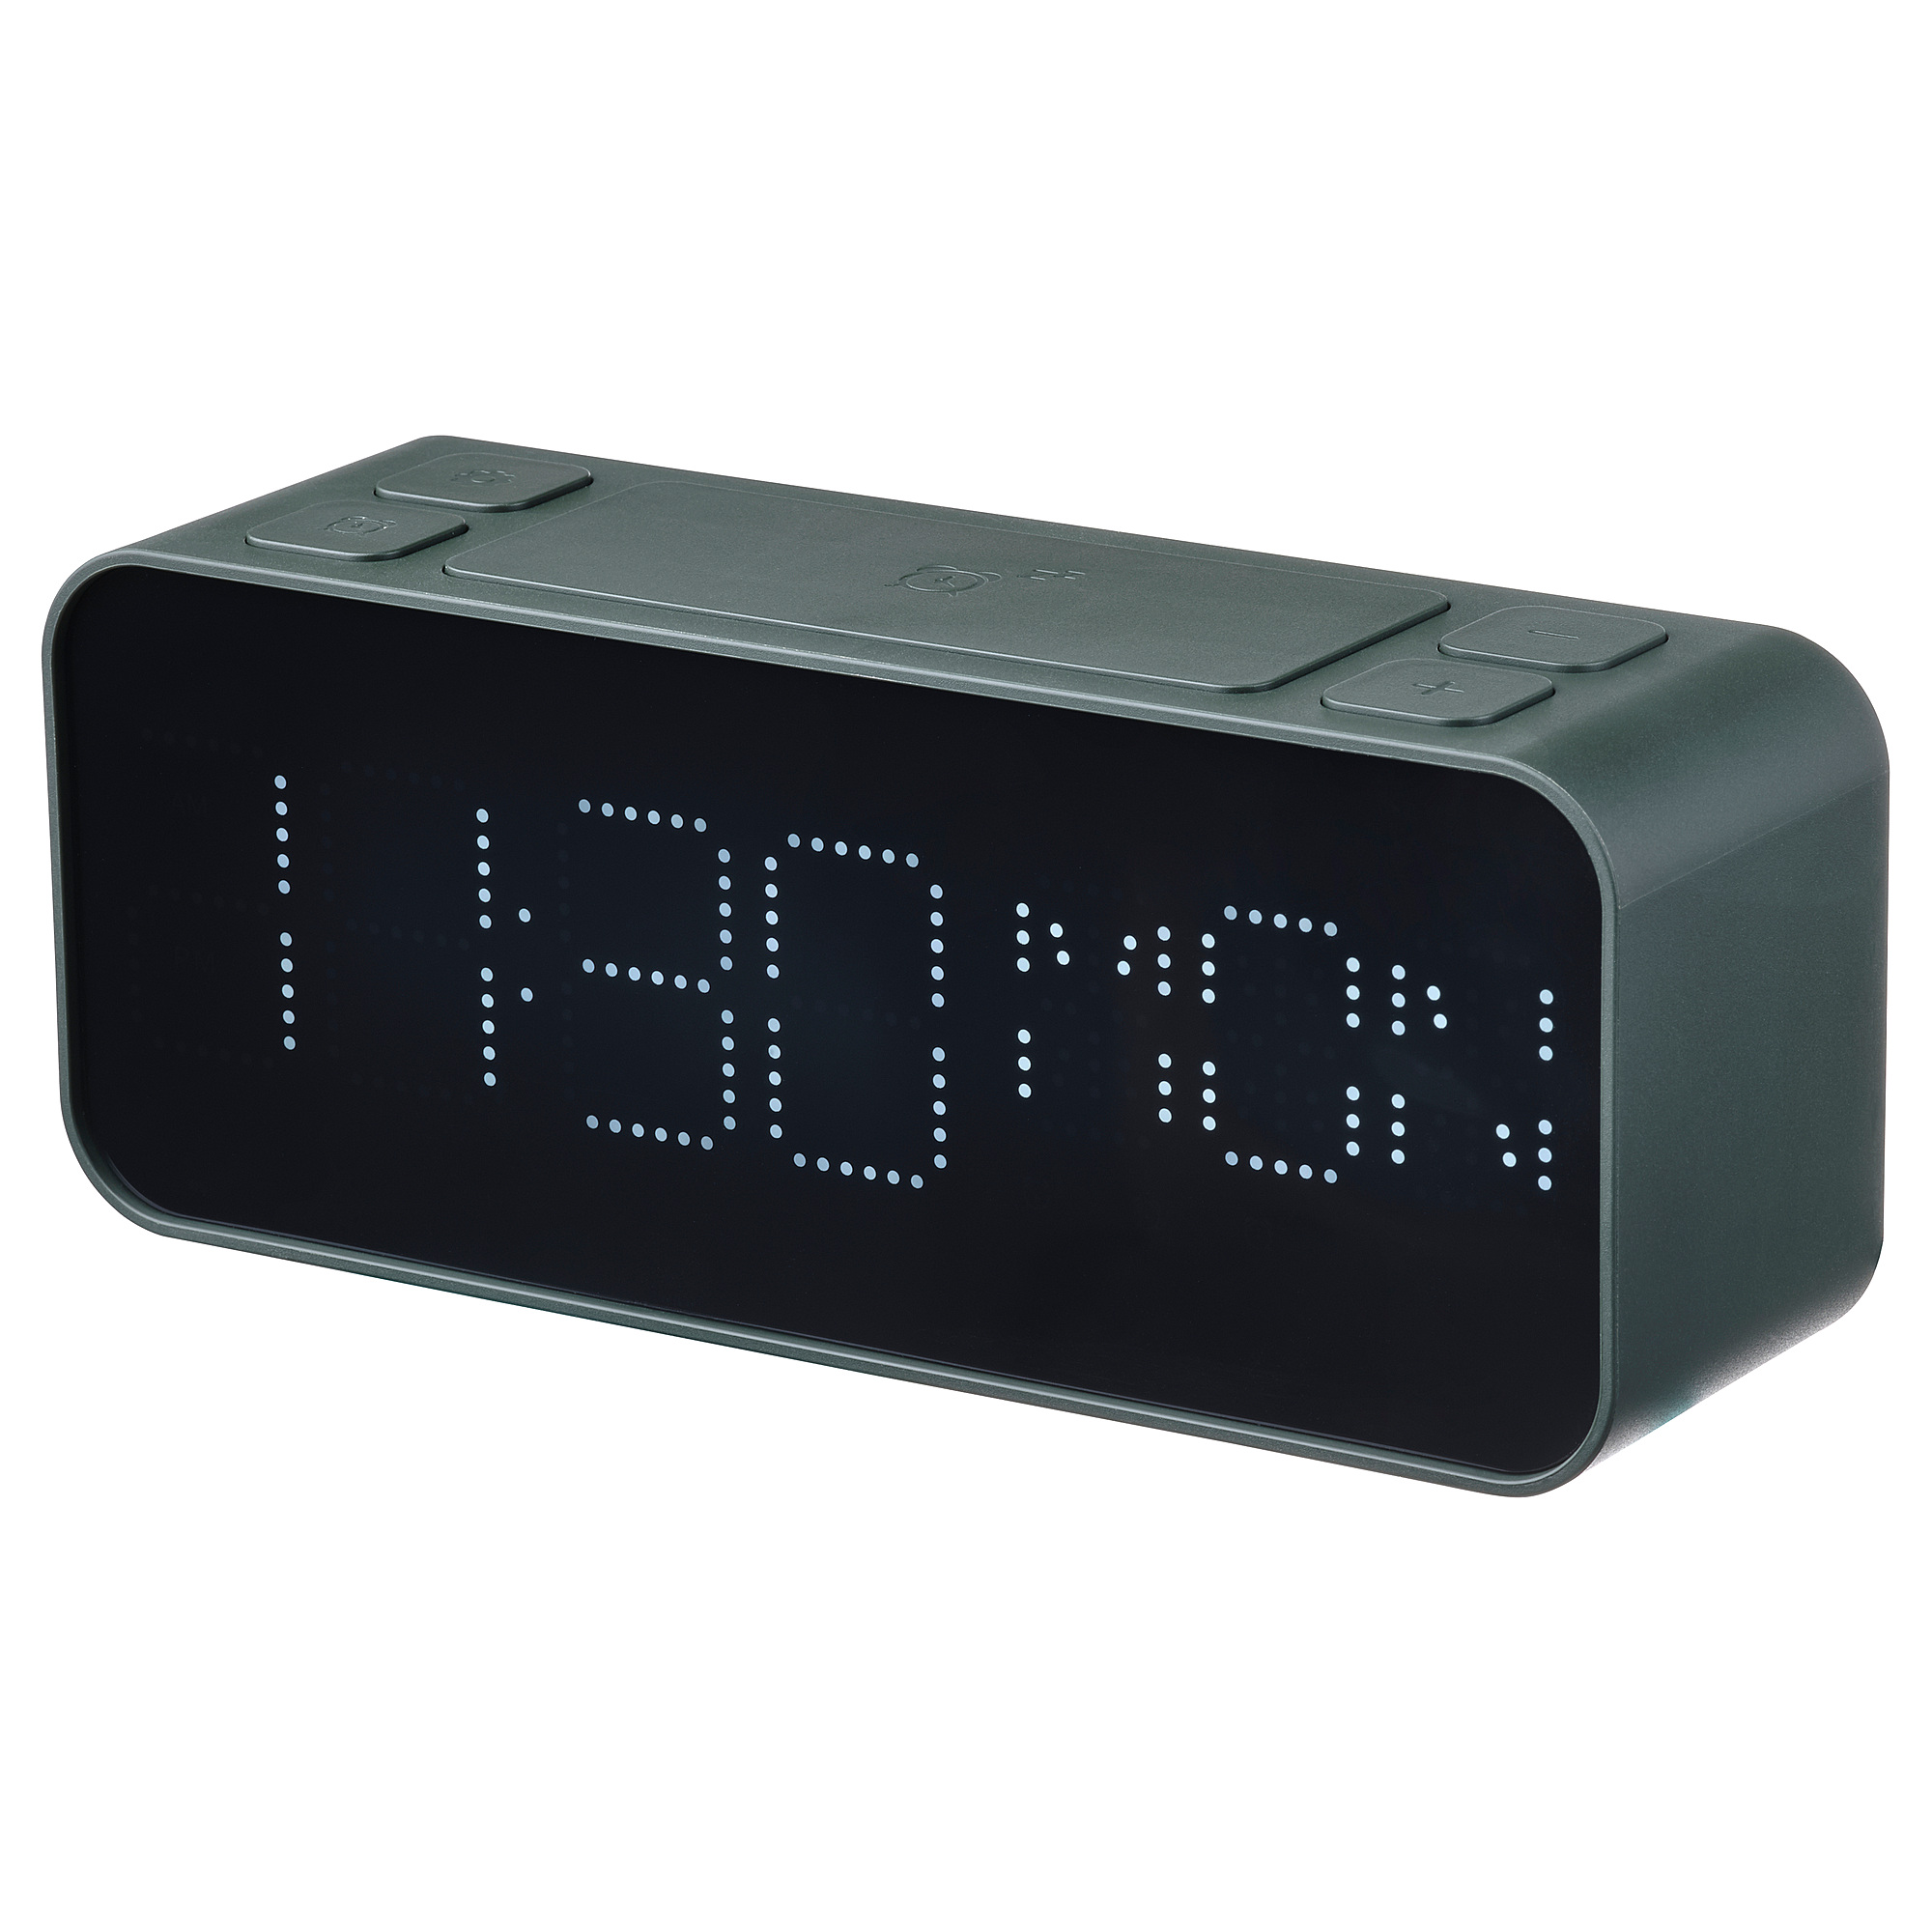 BONDTOLVAN alarm clock